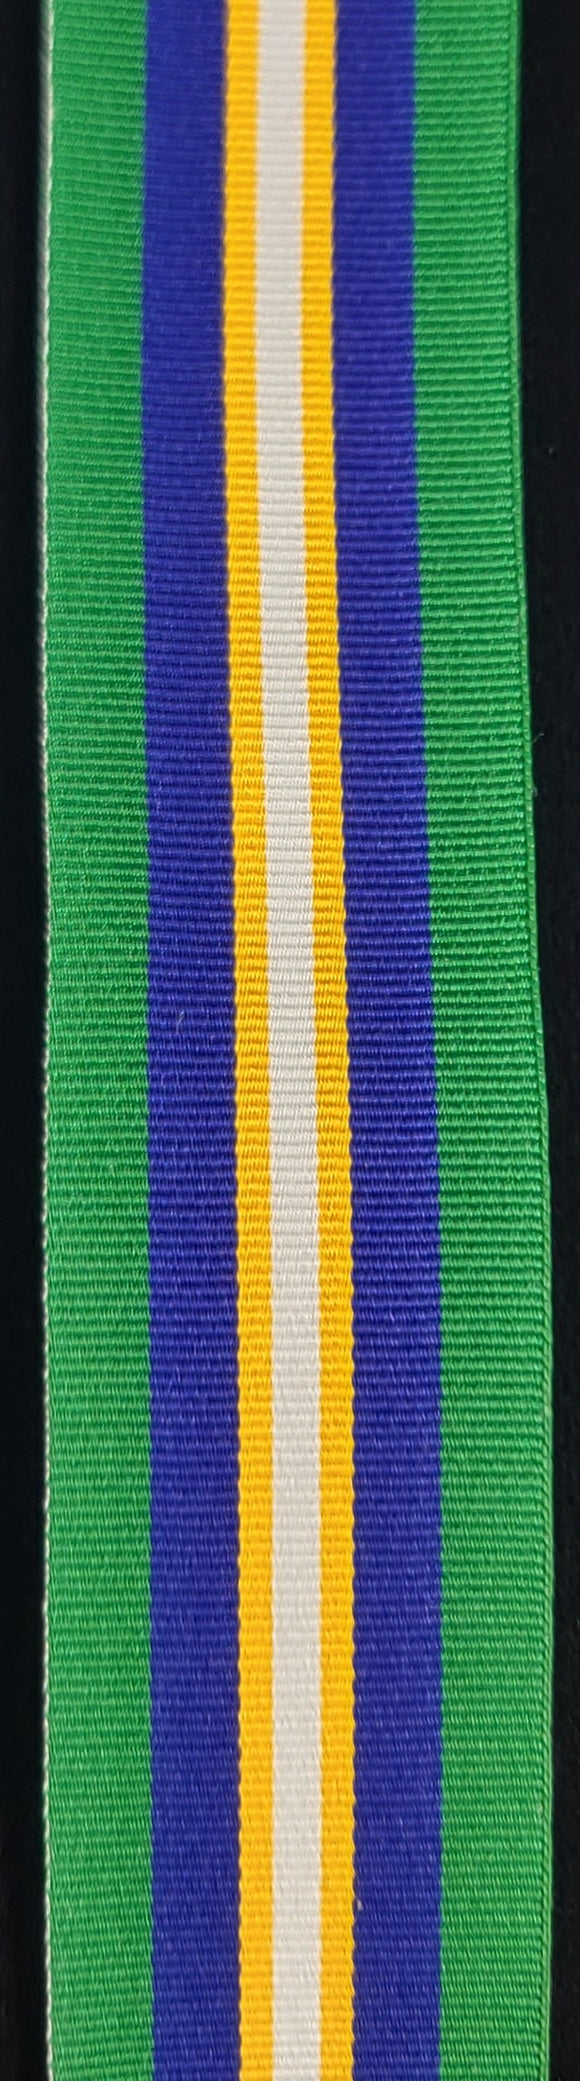 Ribbon, Trinidad and Tobogo Efficiency Medal